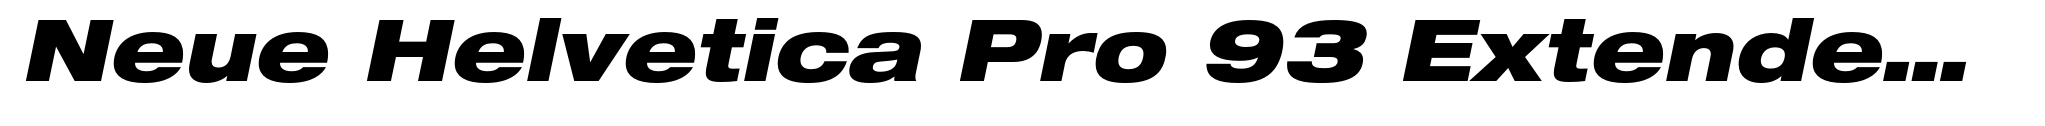 Neue Helvetica Pro 93 Extended Black Oblique image